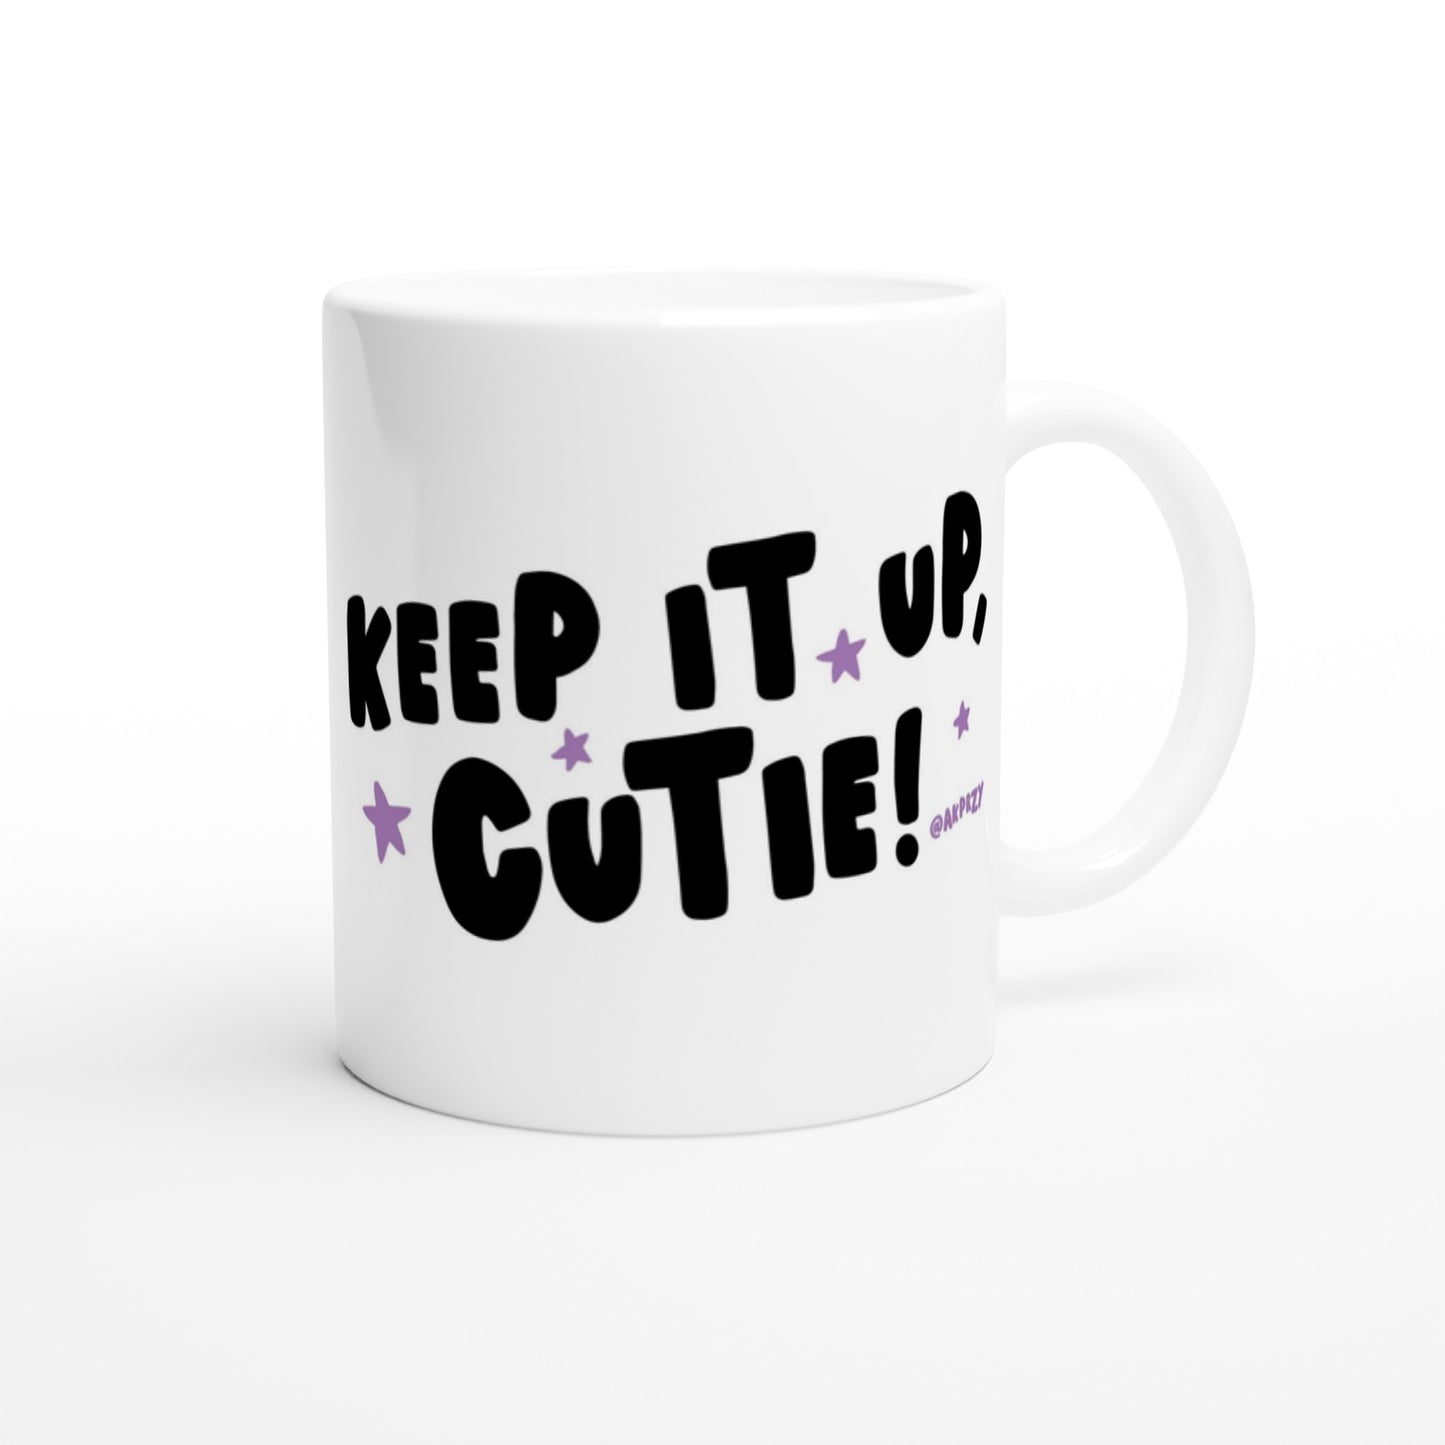 White 11oz Ceramic Mug - KEEP IT UP, CUTIE